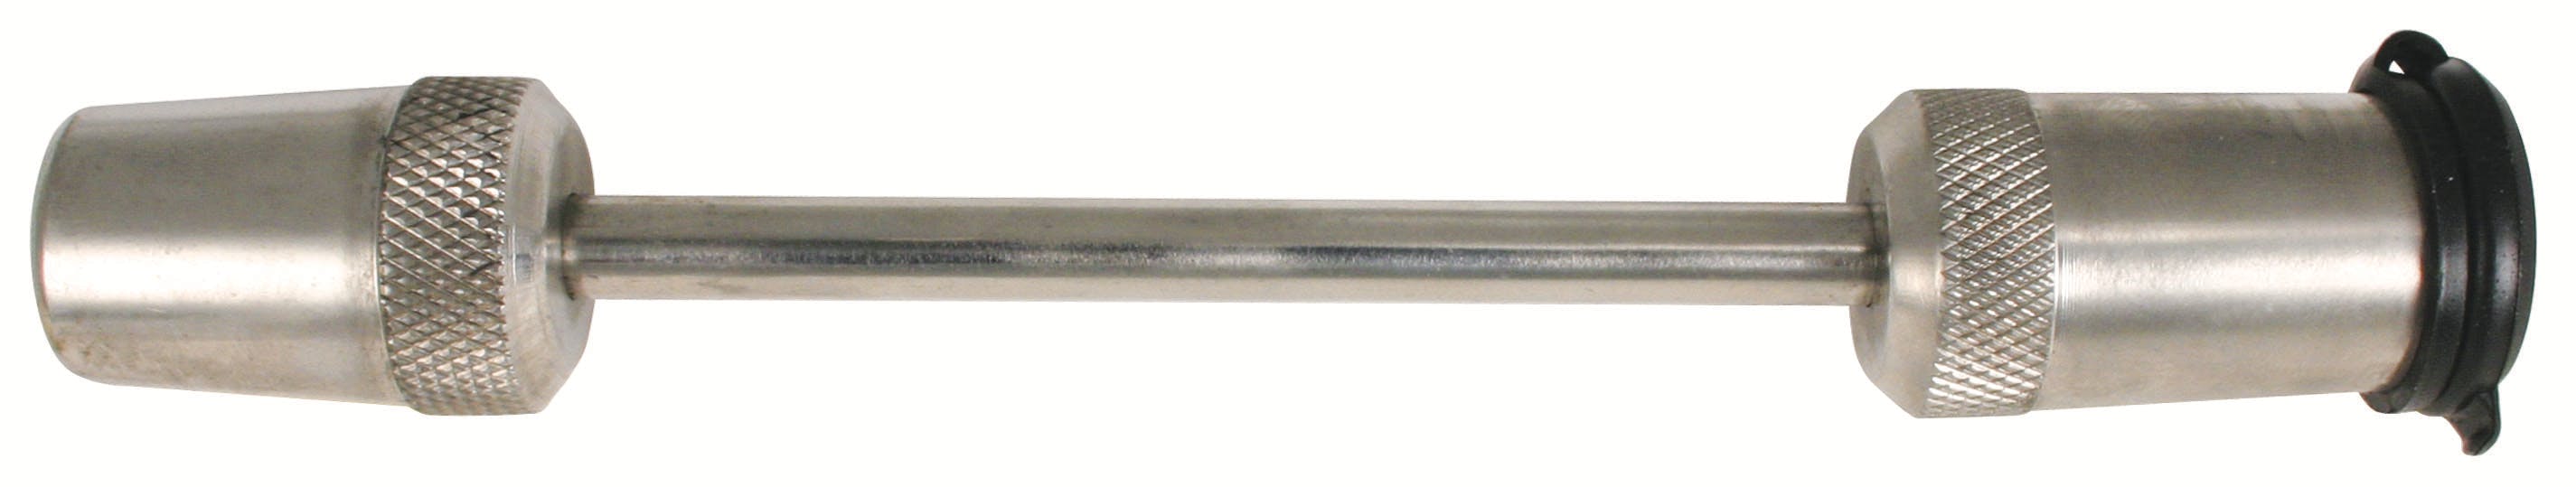 TRIMAX SXTC3 Premium Stainless Steel Coupler Lock (3 1/2 inch Span)